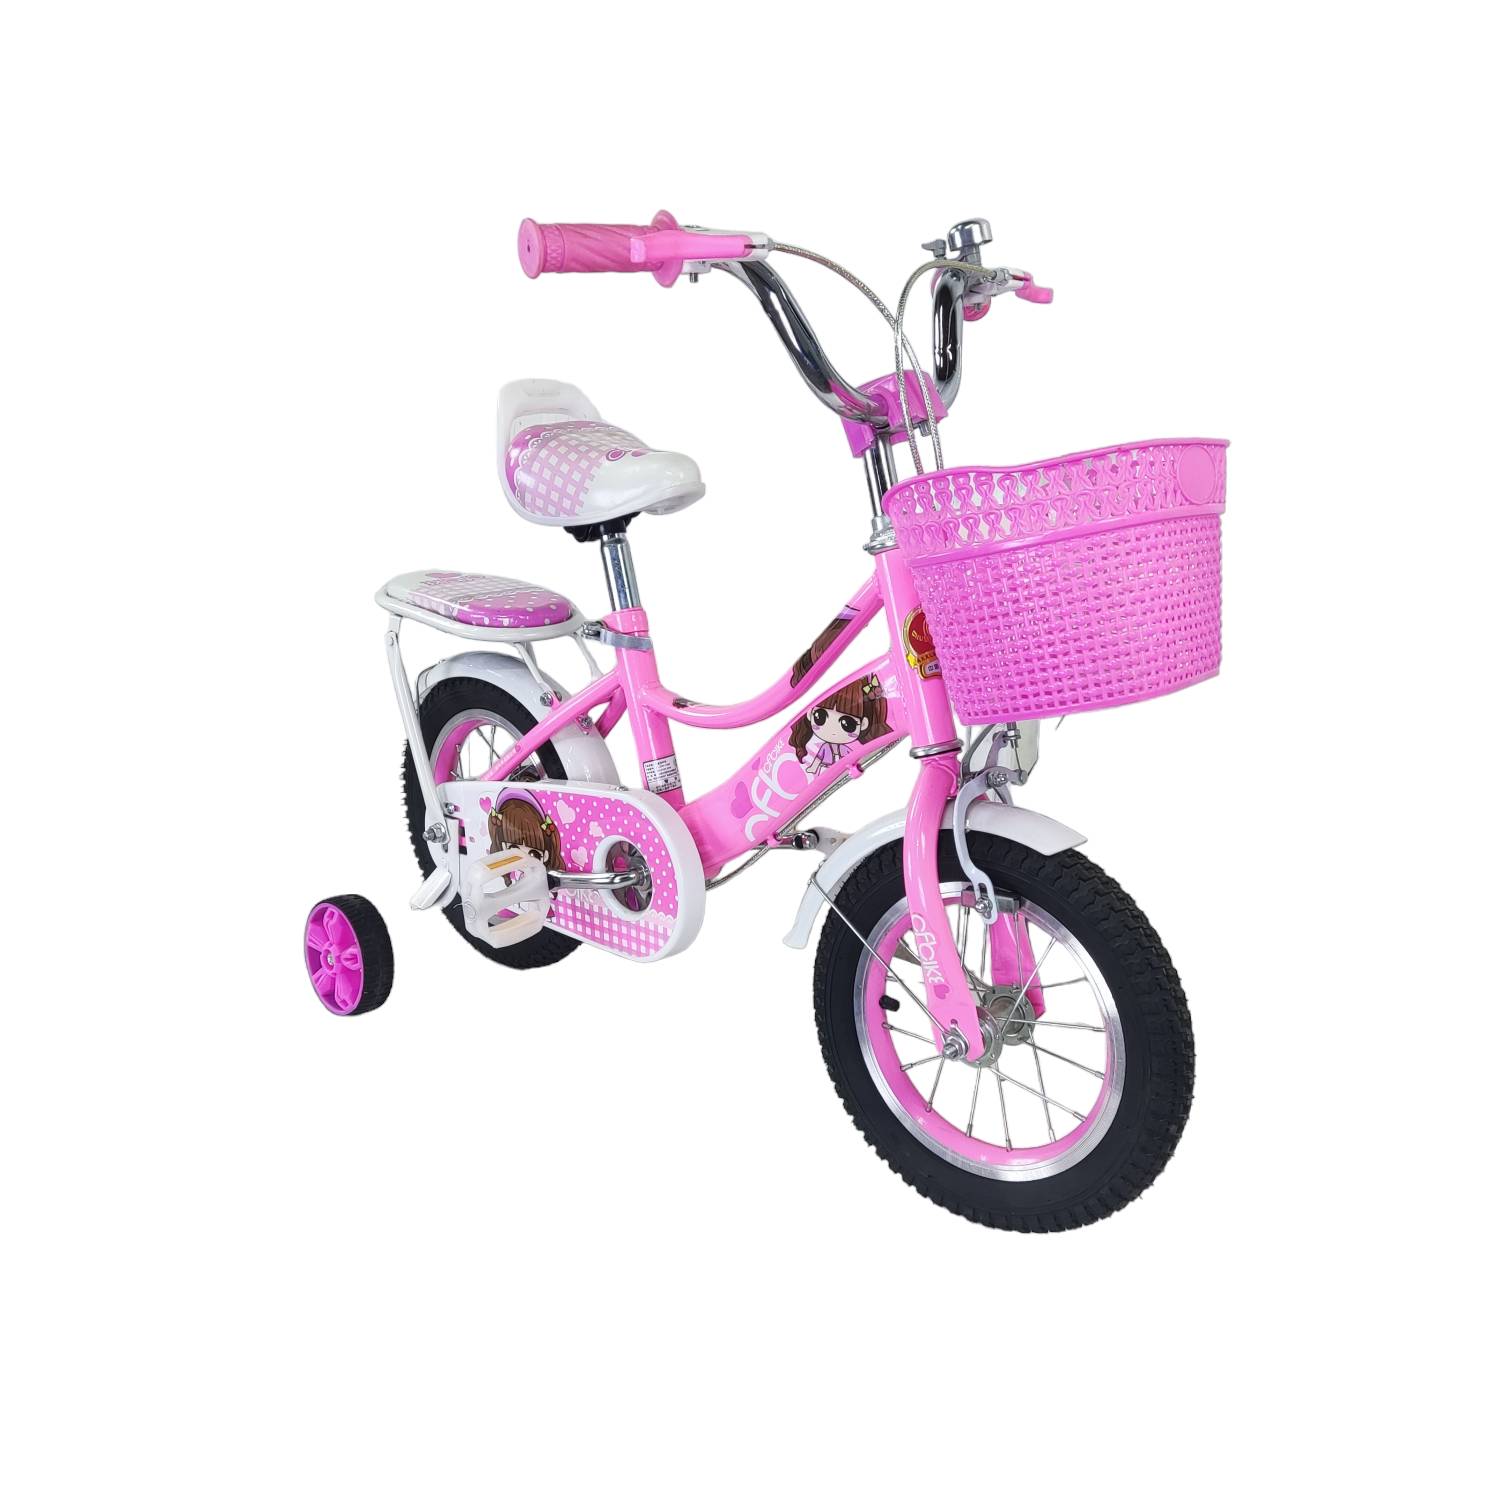 GENERICO Bicicleta Infantil Rosa-blanco Aro 12 niña